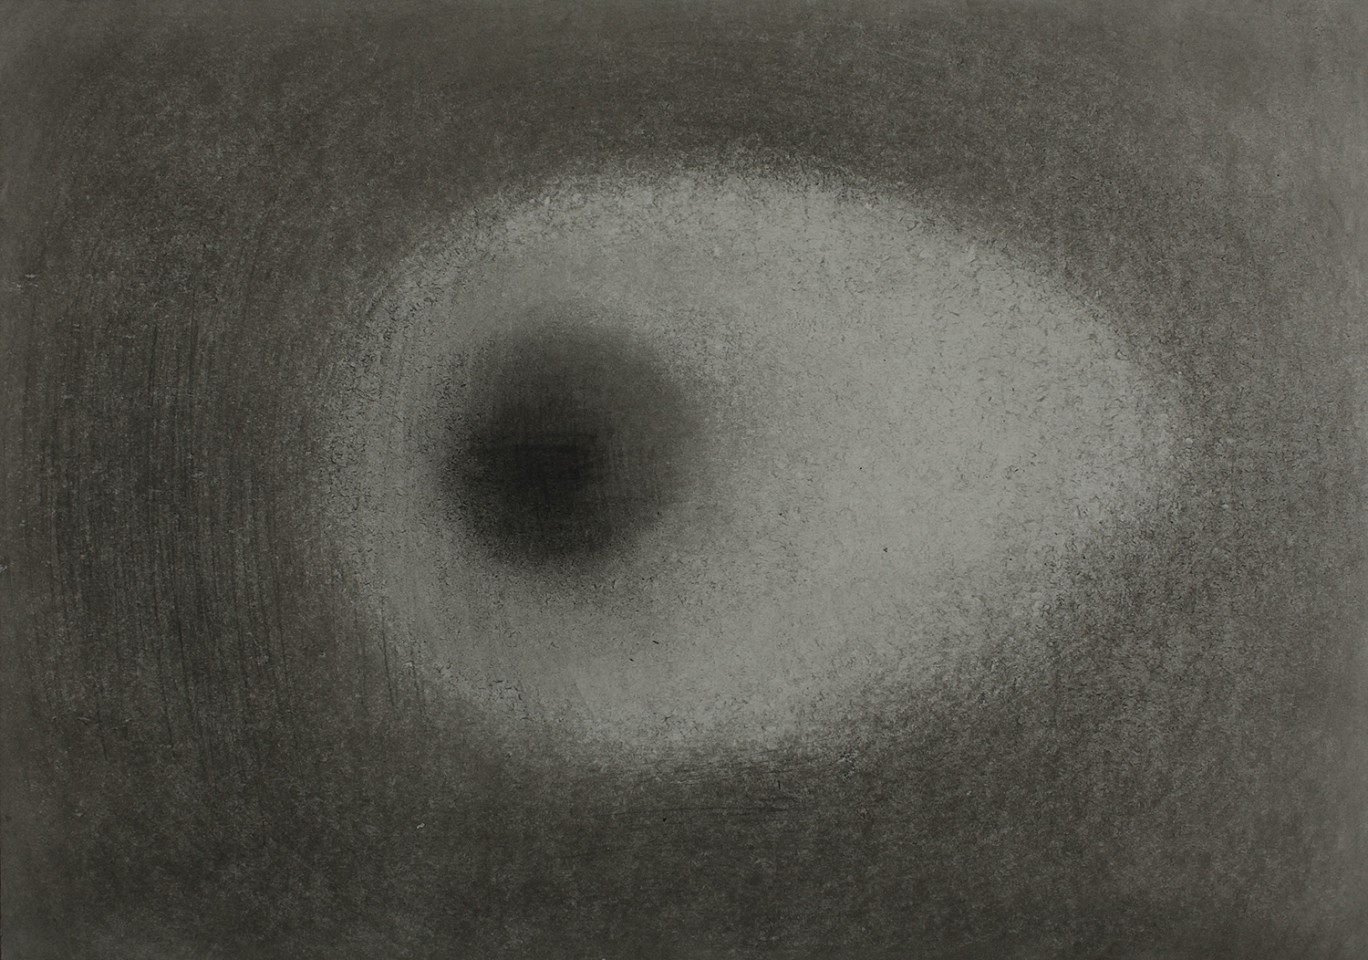 Vaclav Cigler, Sphere # 2
2010, Graphite on paper